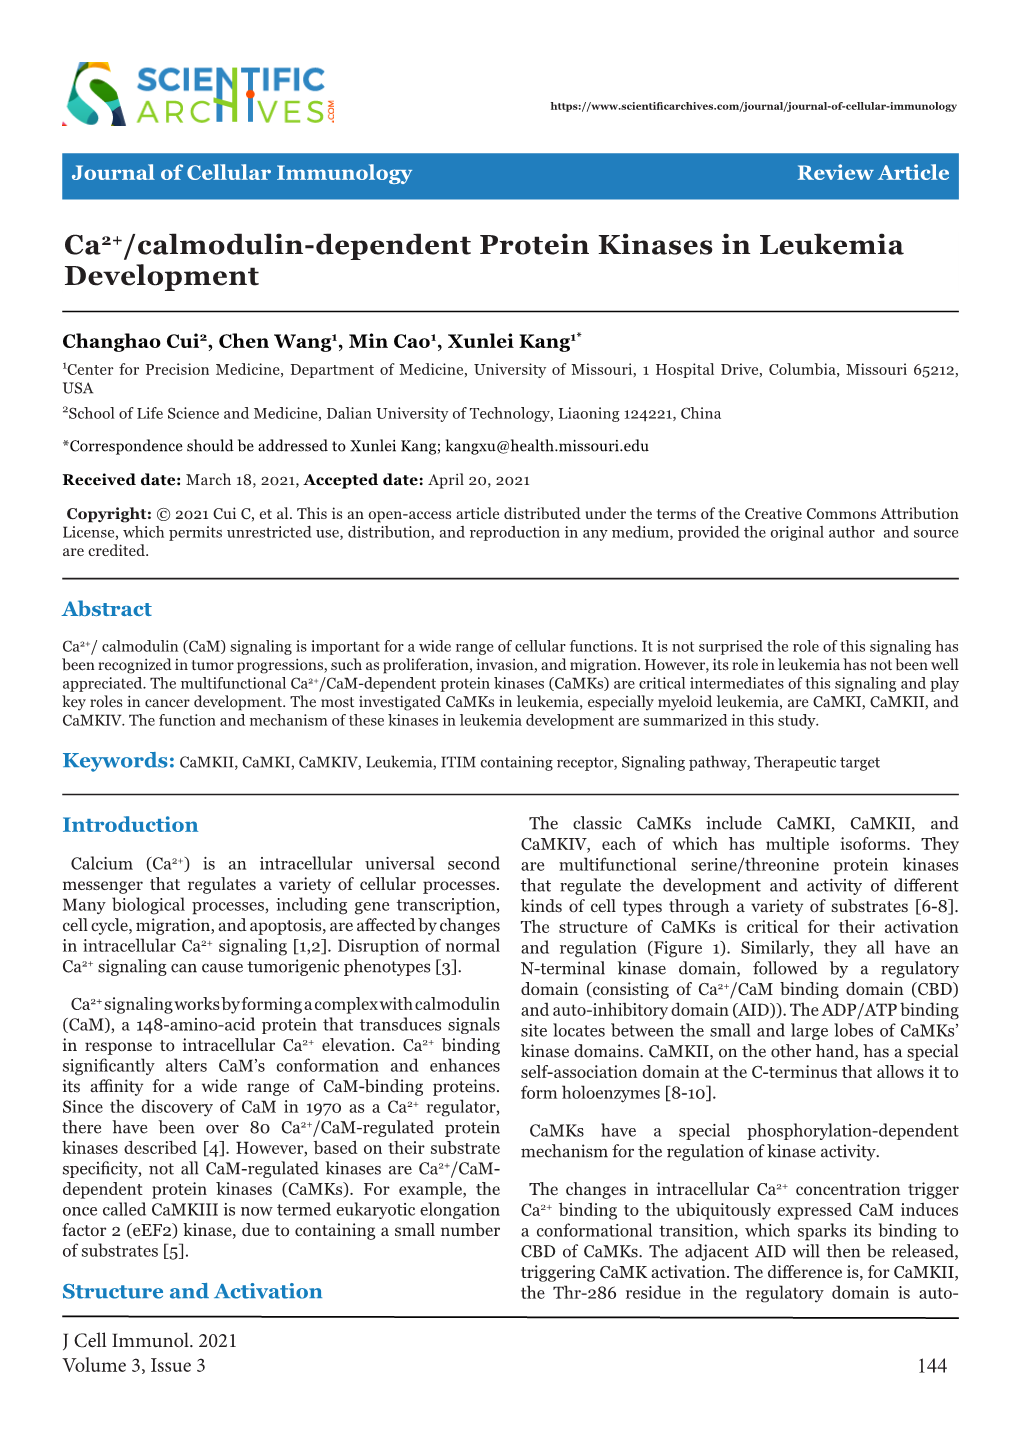 Ca2+/Calmodulin-Dependent Protein Kinases in Leukemia Development